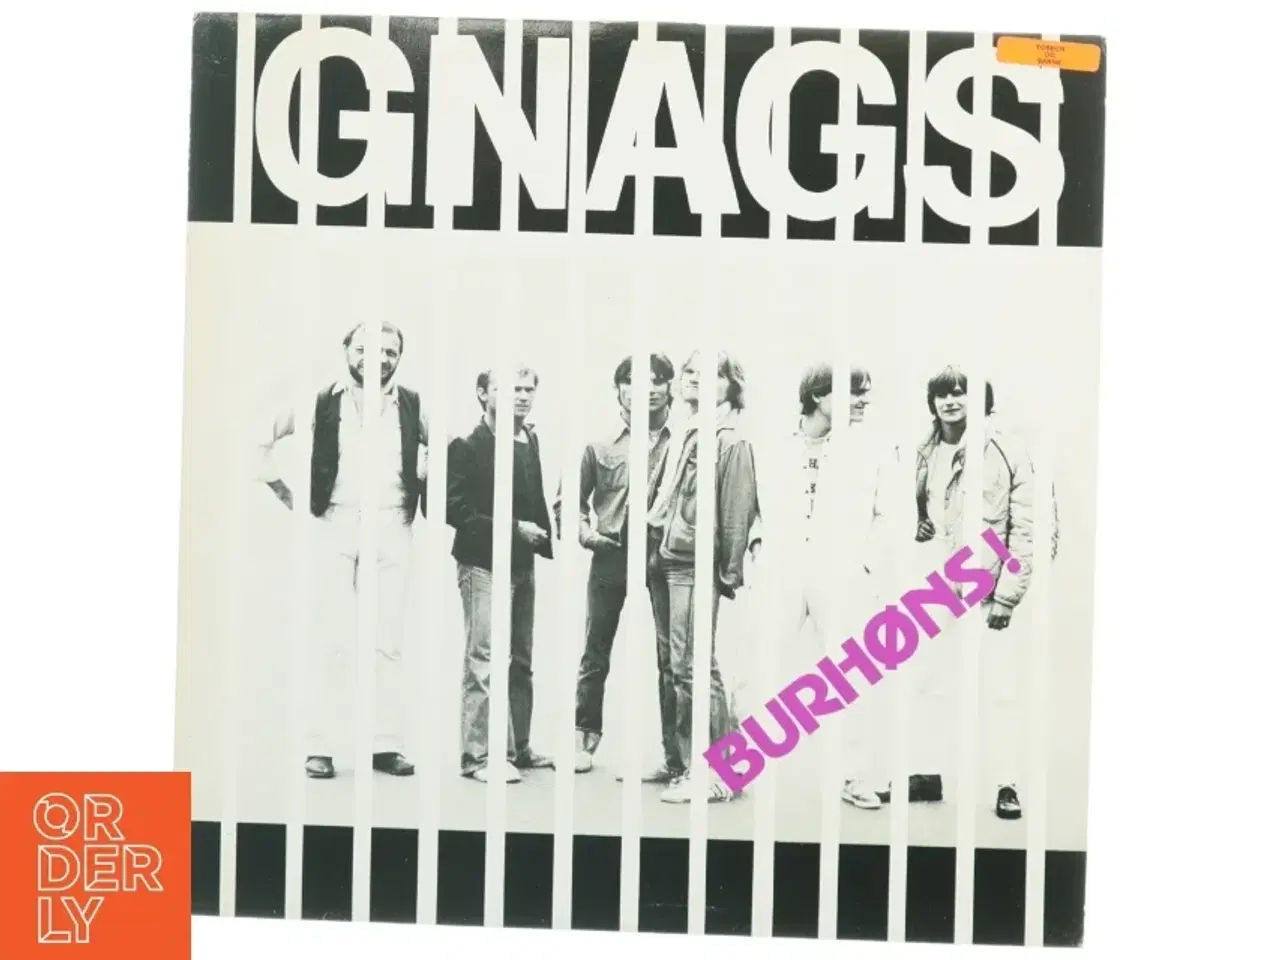 Billede 1 - Gnags - Burhøns LP vinylplade (str. 31 x 31 cm)